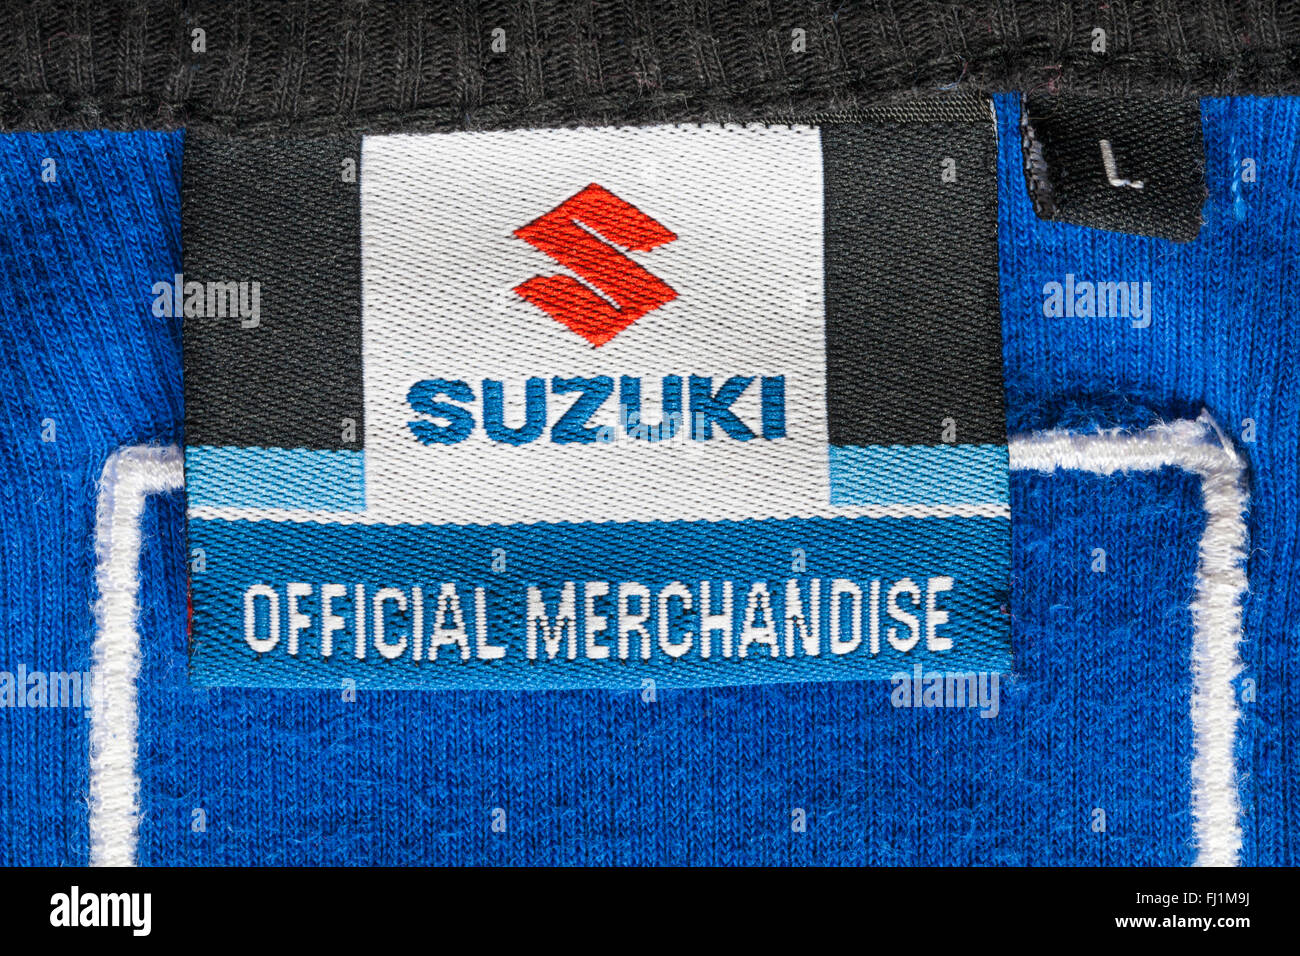 label in Suzuki Official Merchandise blue top Stock Photo